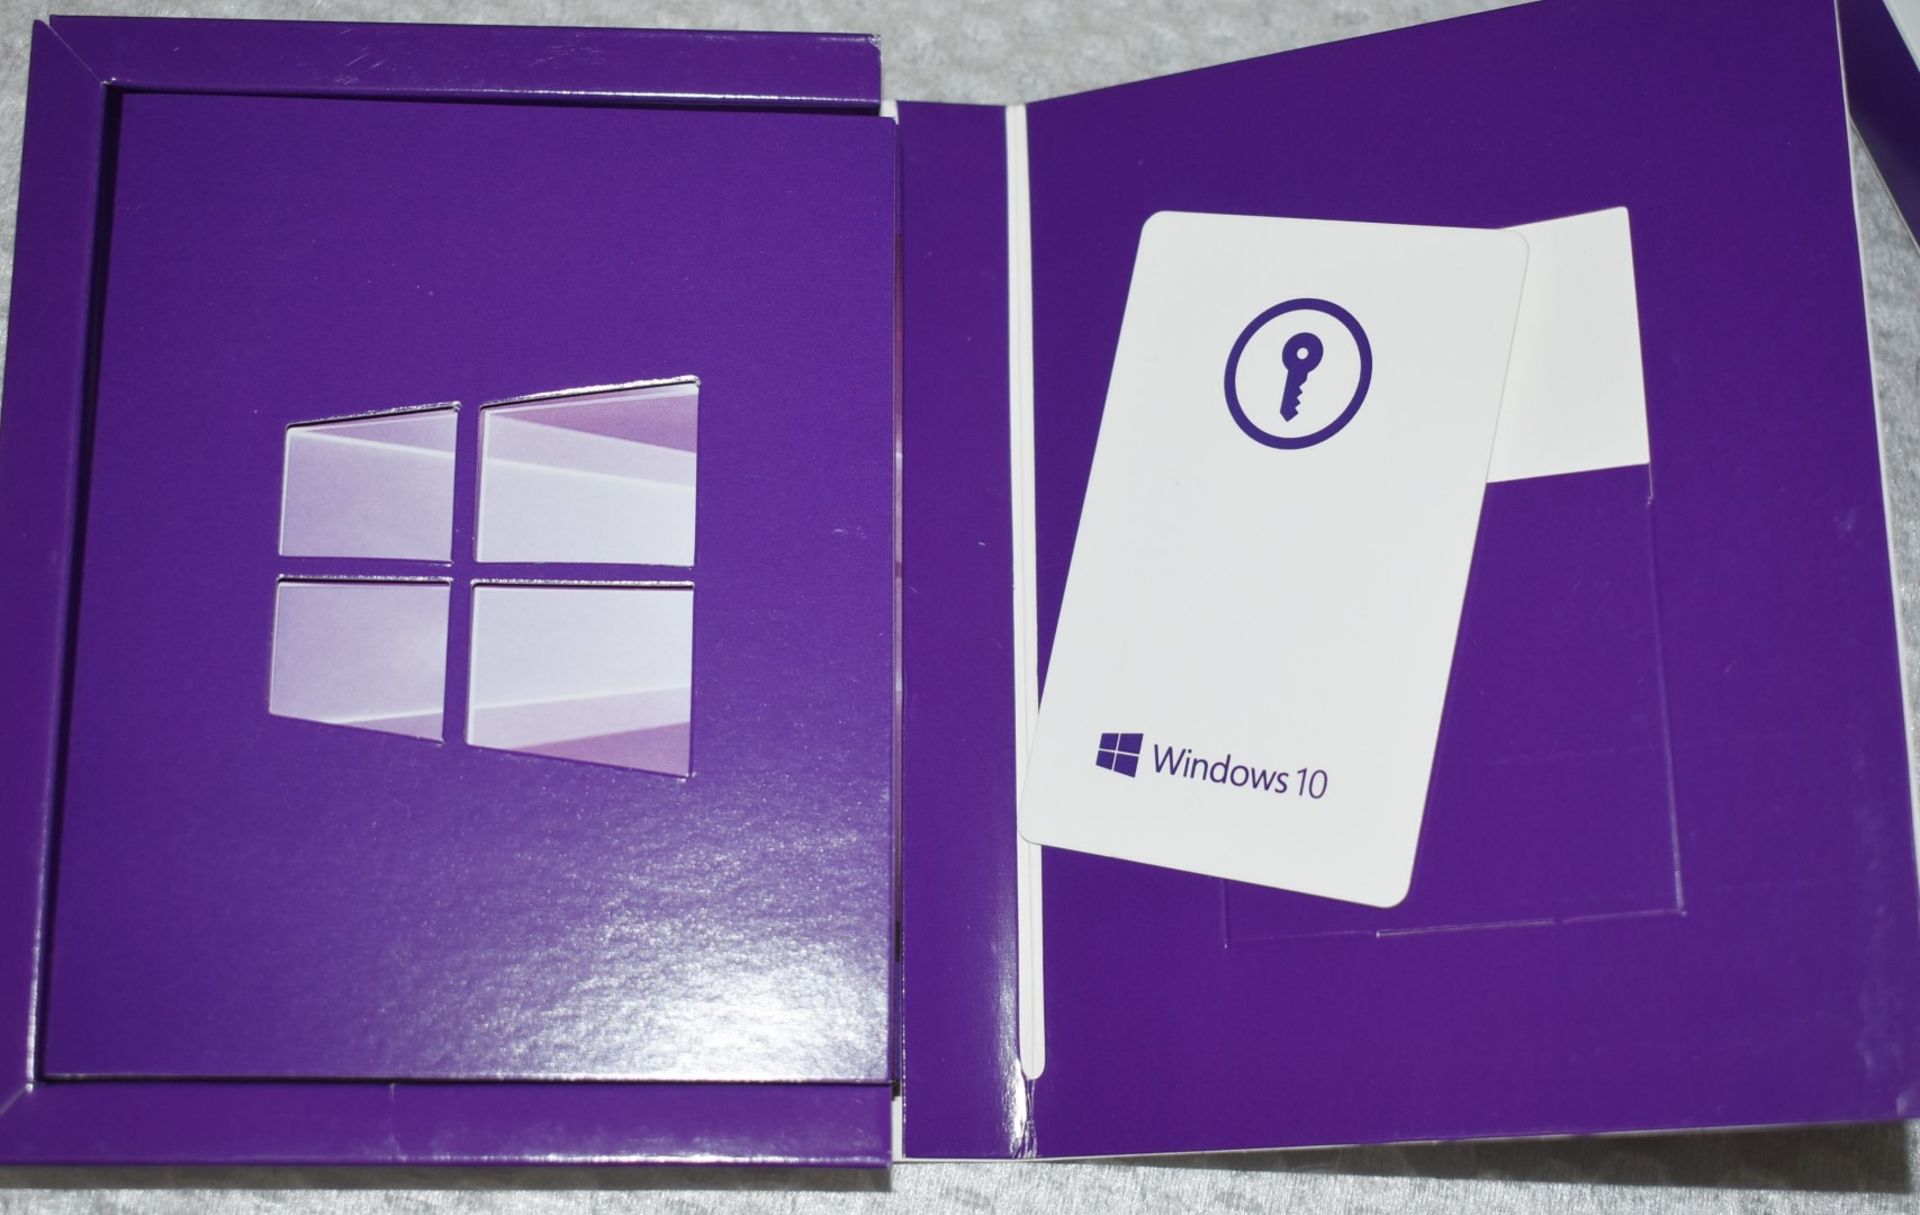 1 x Microsoft Windows 10 Pro Activation Key Card With Original Box - Ref: MPC205 P1 - CL678 - - Image 3 of 4